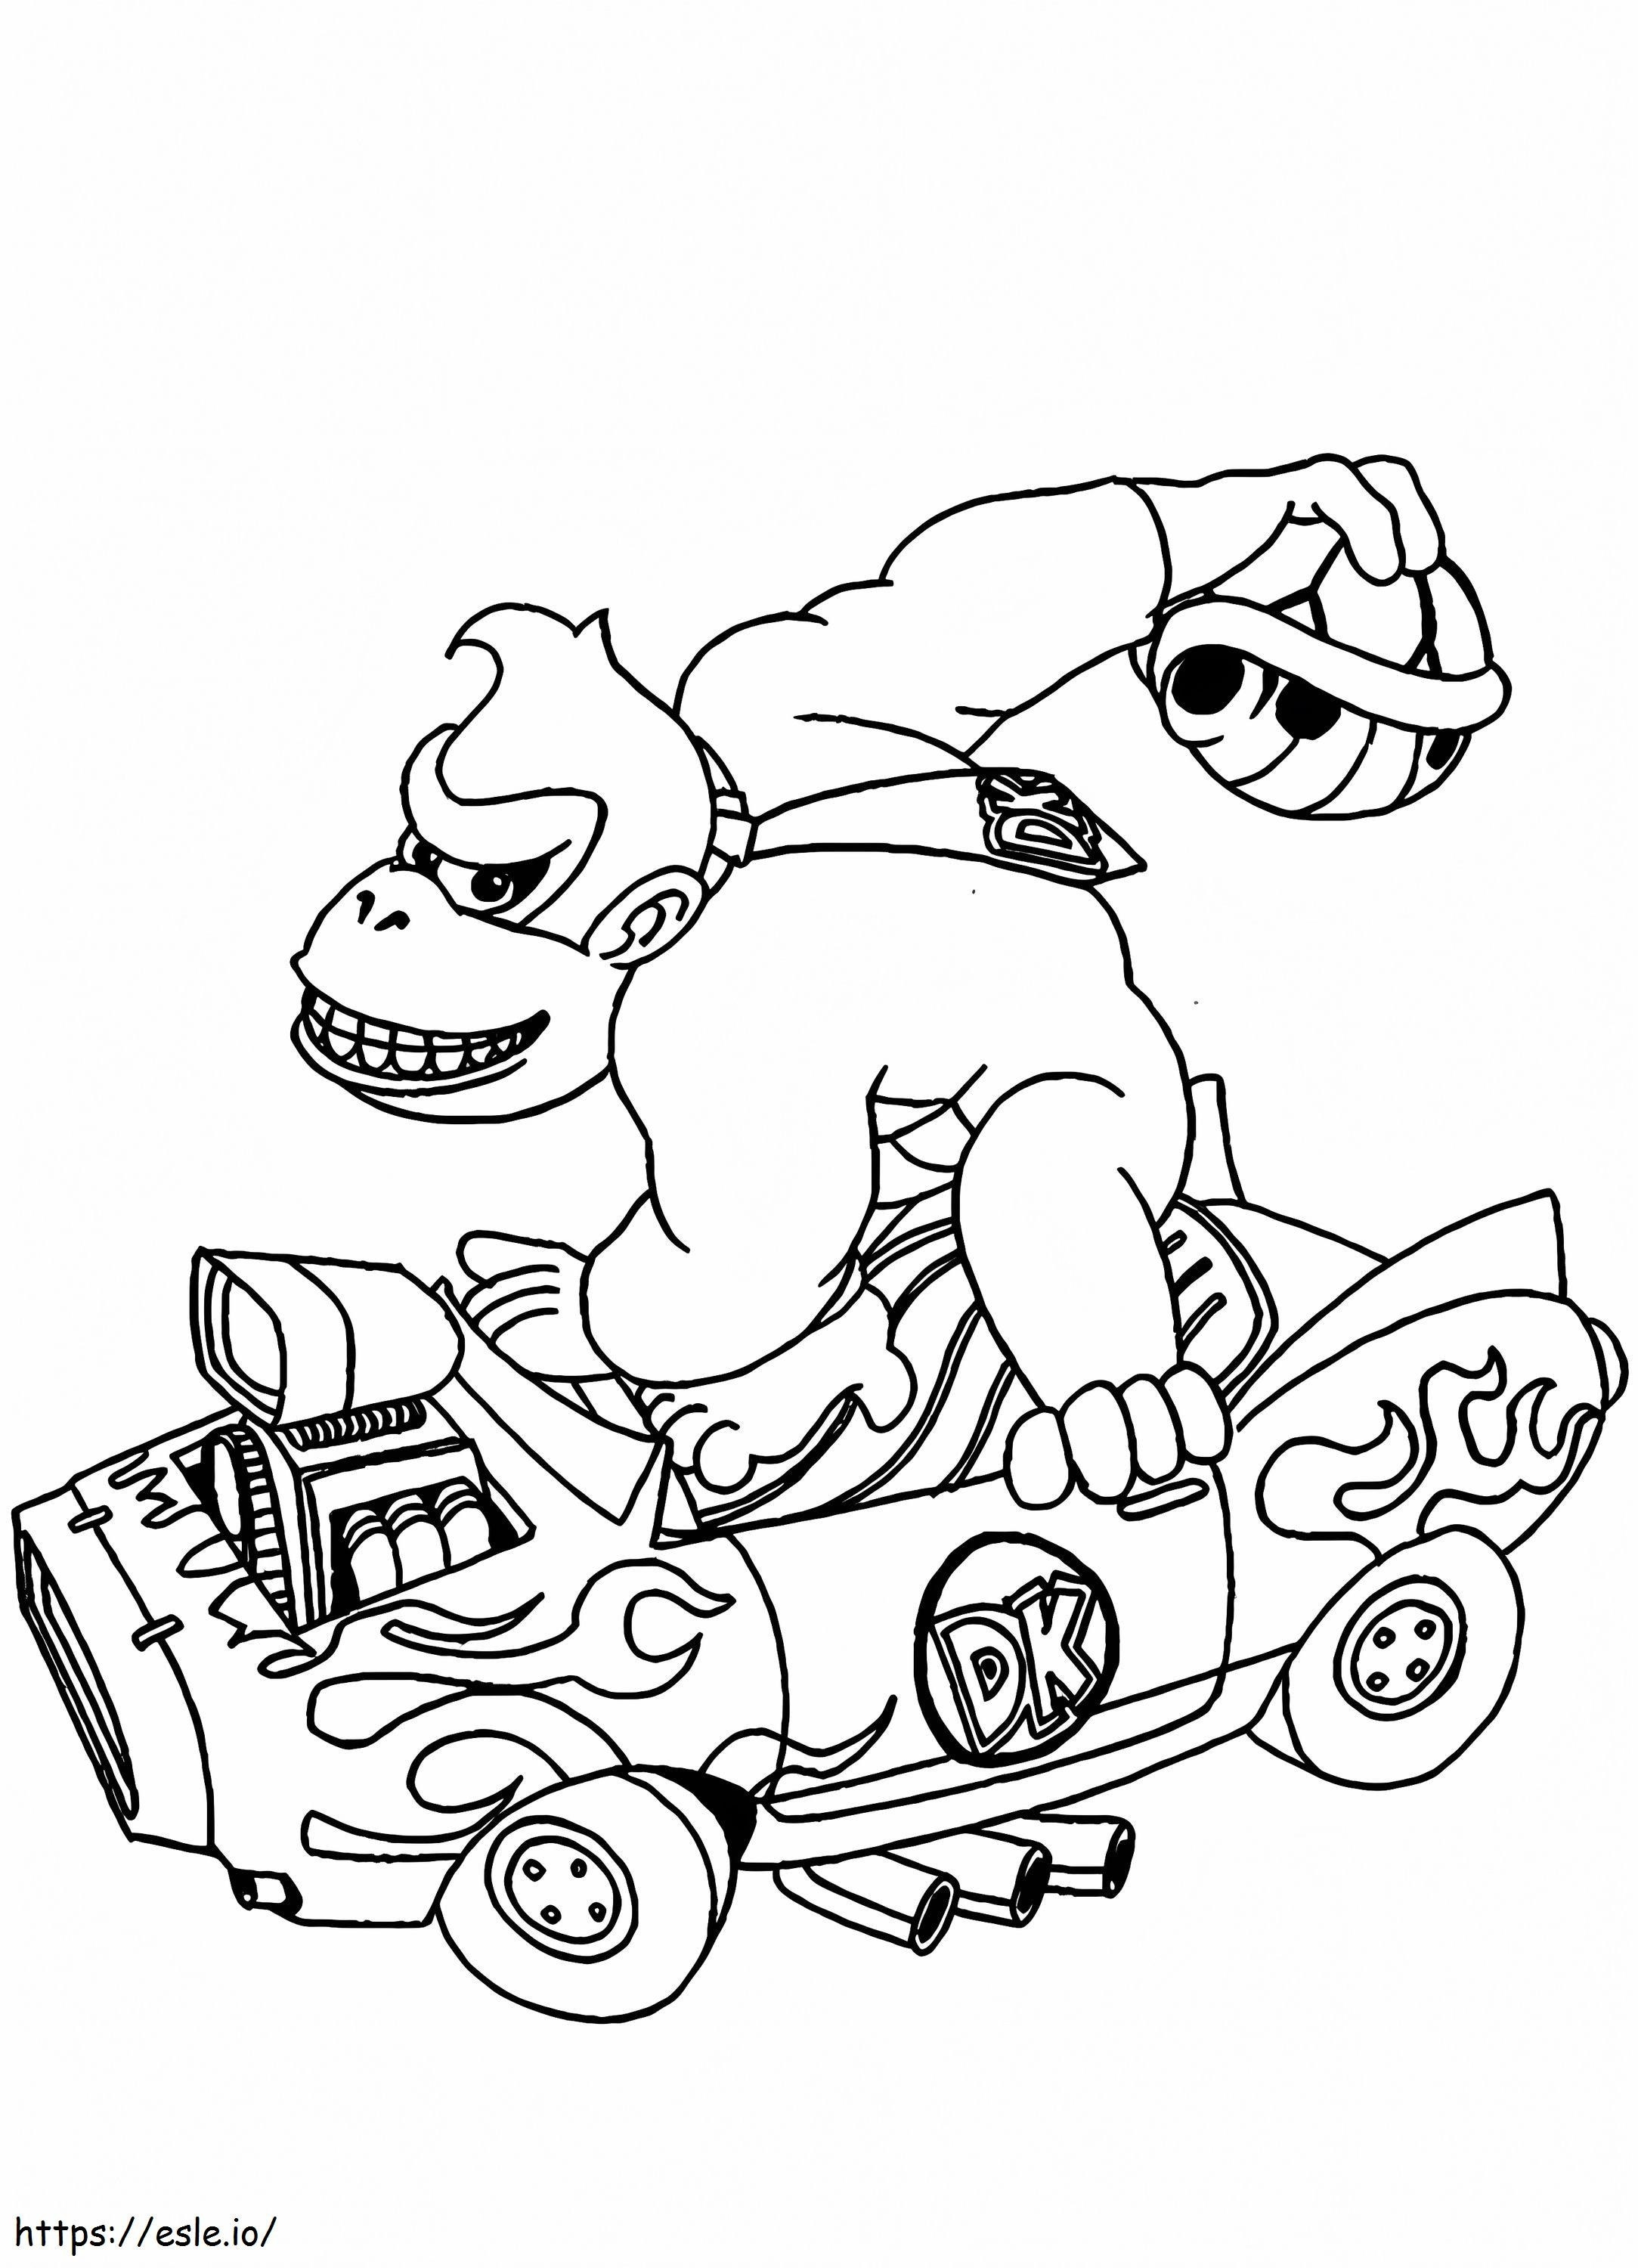 Donkey Kong conduce o mașină de colorat